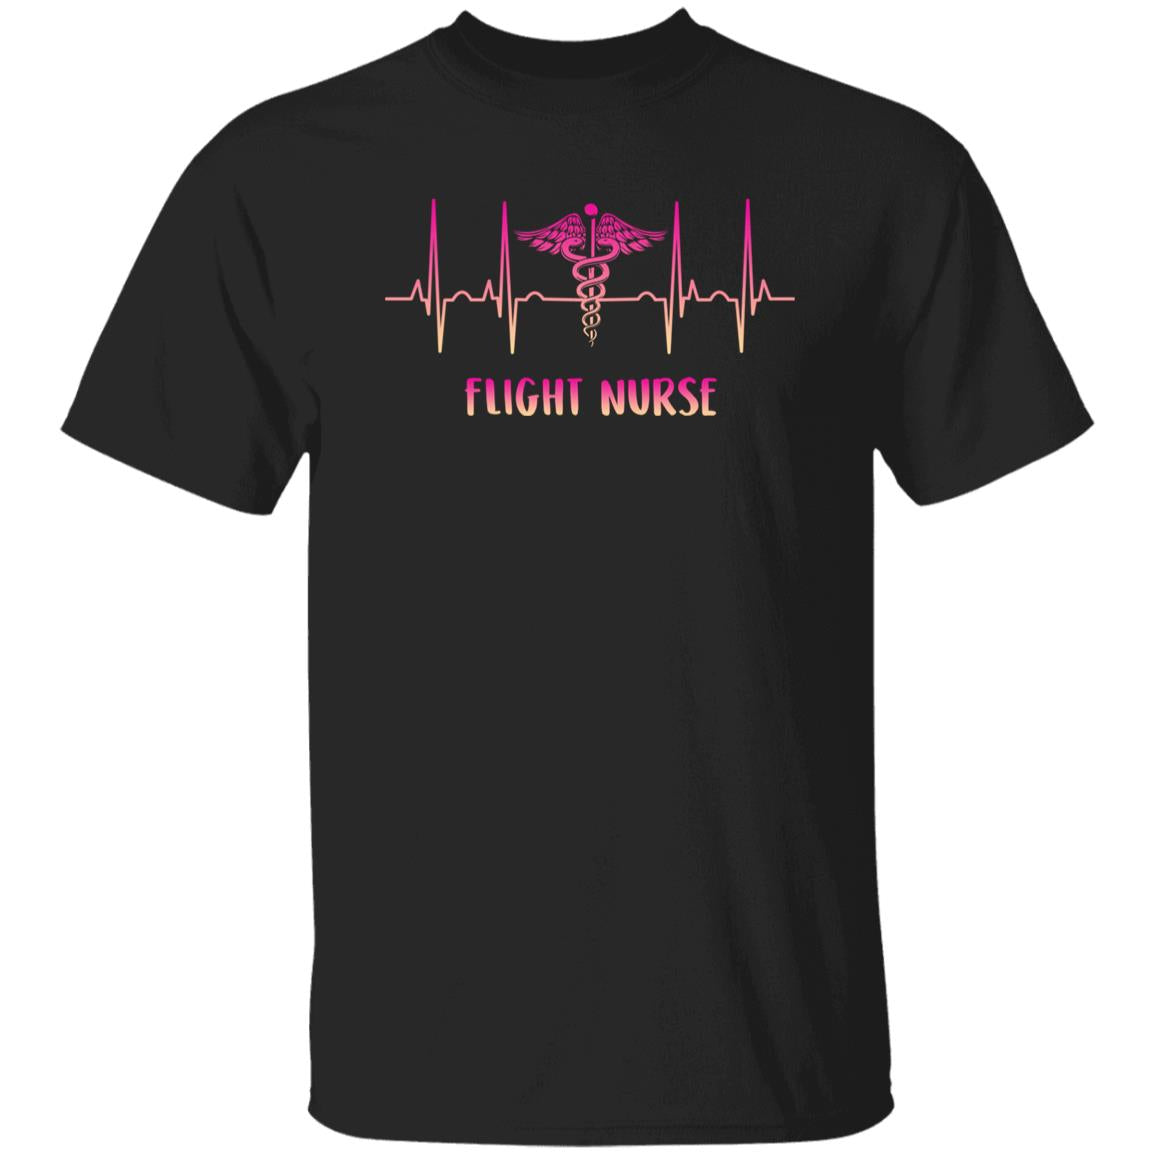 Flight nurse Heartbeat T-Shirt EMS flight team nurse heart beat Unisex Tee Black Navy Dark Heather-Family-Gift-Planet